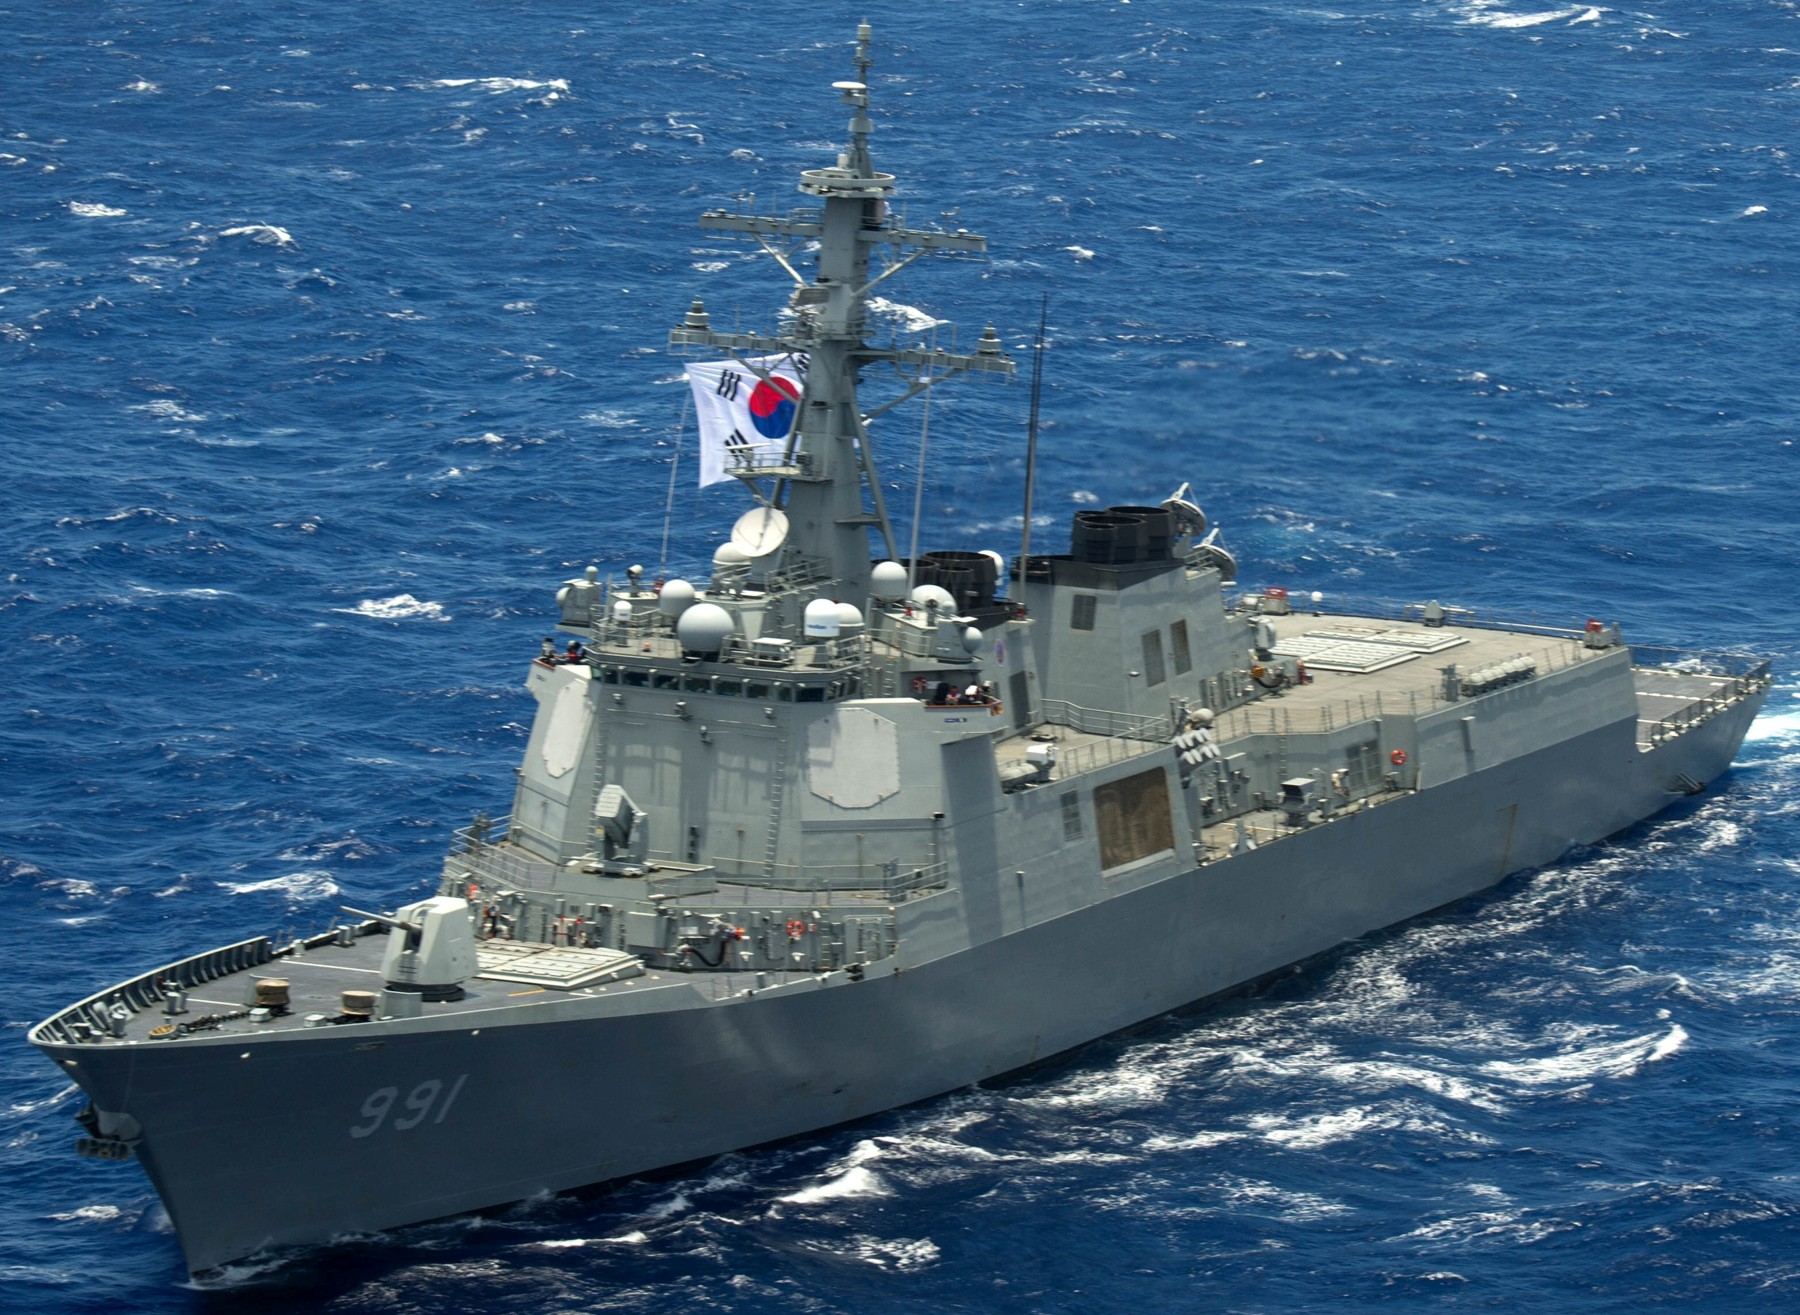 ddg-991 roks sejong the great guided missile destroyer aegis republic of korea navy rok 21